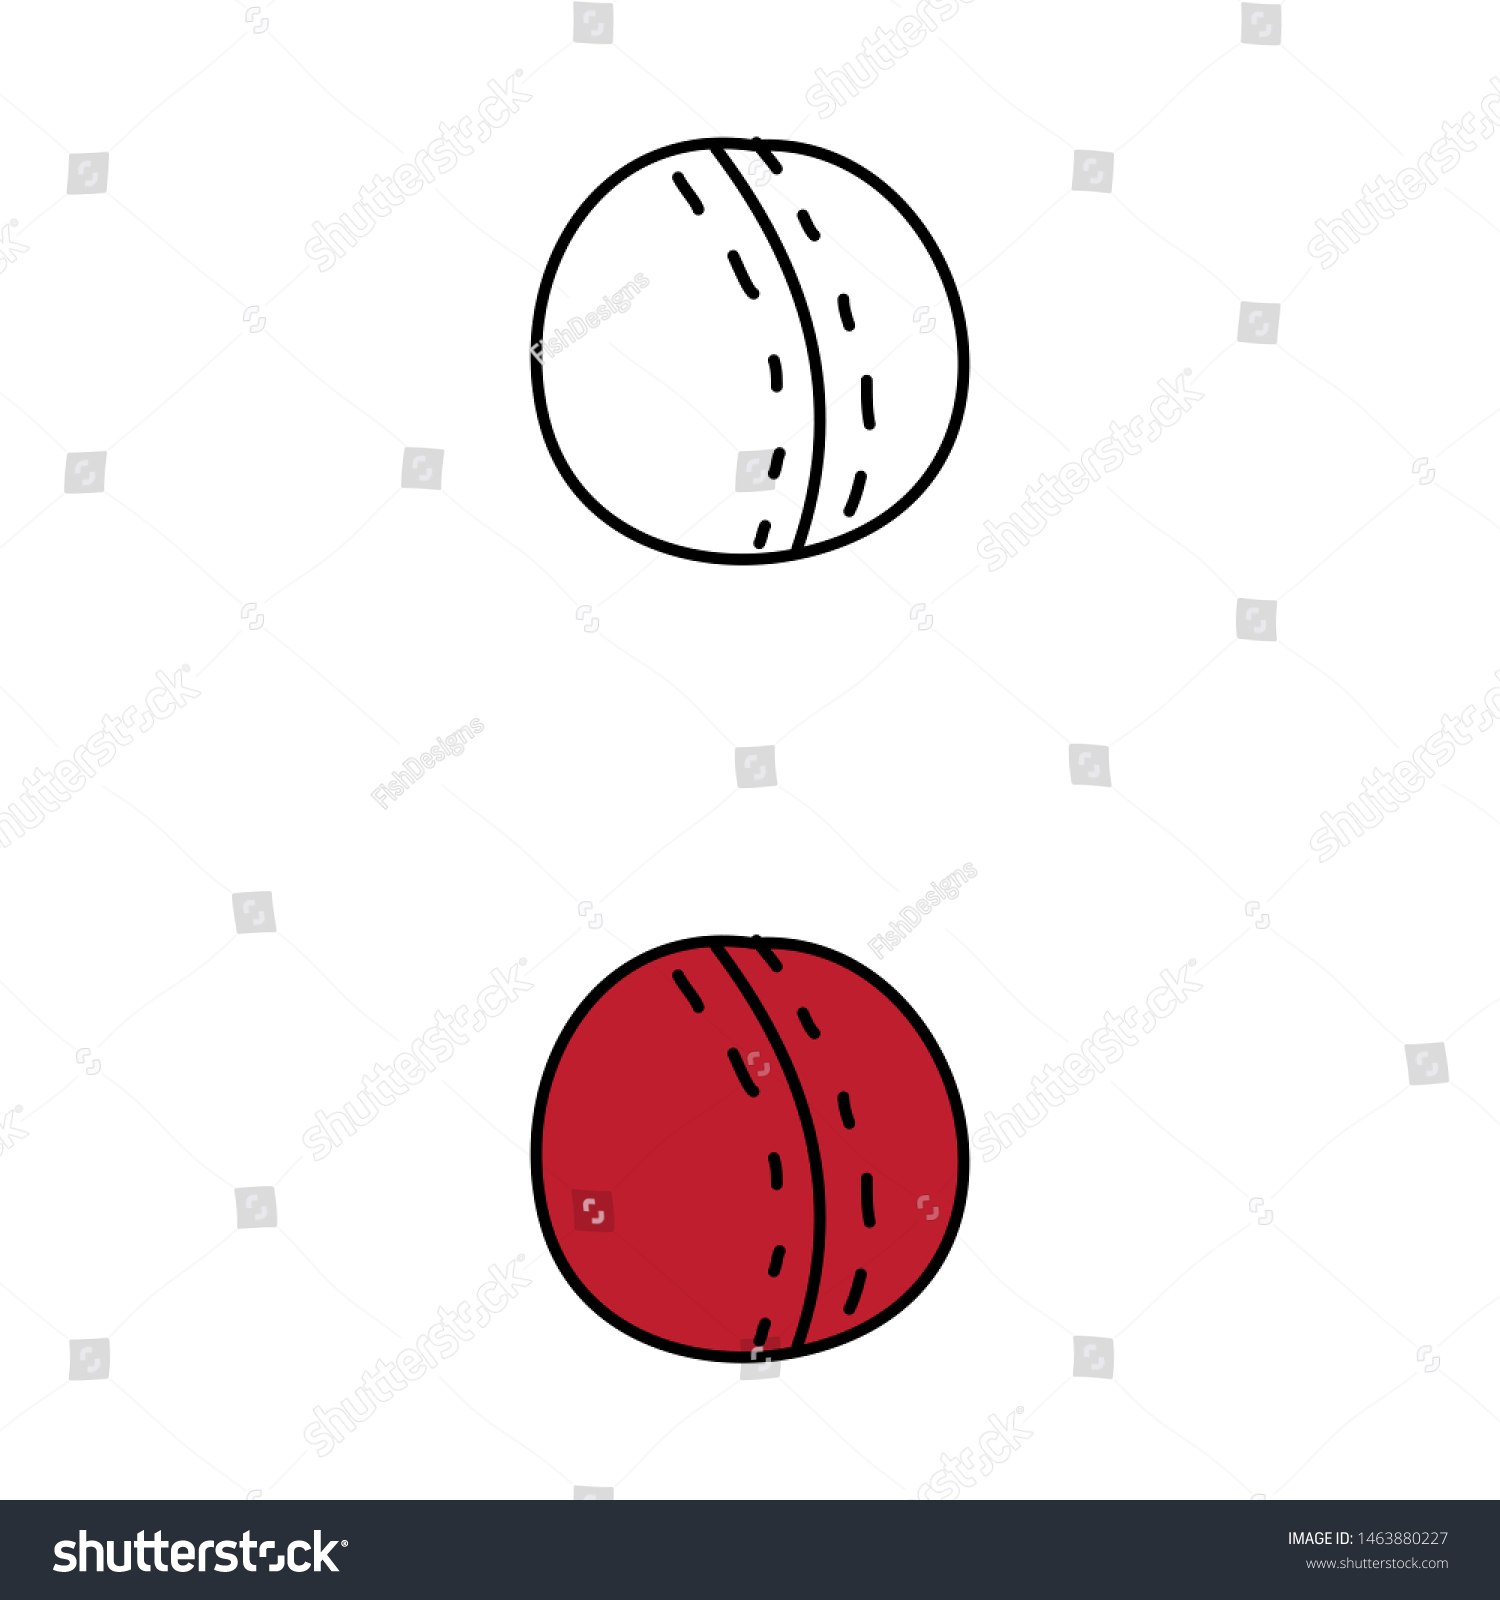 Cartoon Drawing Cricket Ball Stock Vector Royalty Free 1463880227